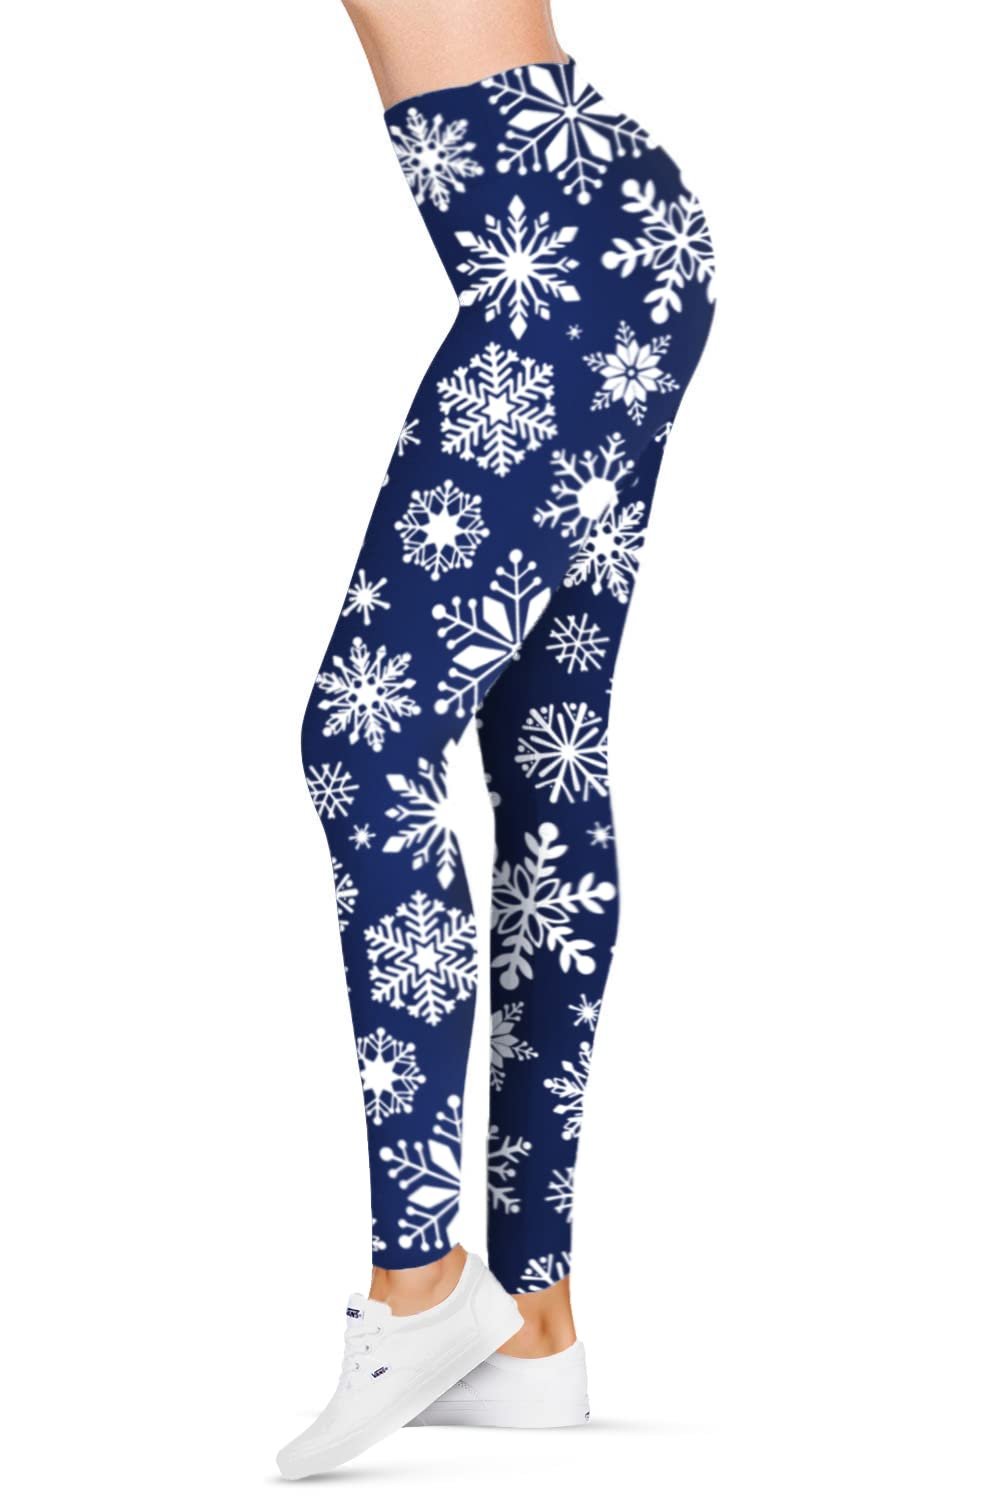 SATINA Christmas Leggings for Women - Buttery Soft Highwaisted Blue Snowflake Holiday Leggings (Plus Size)